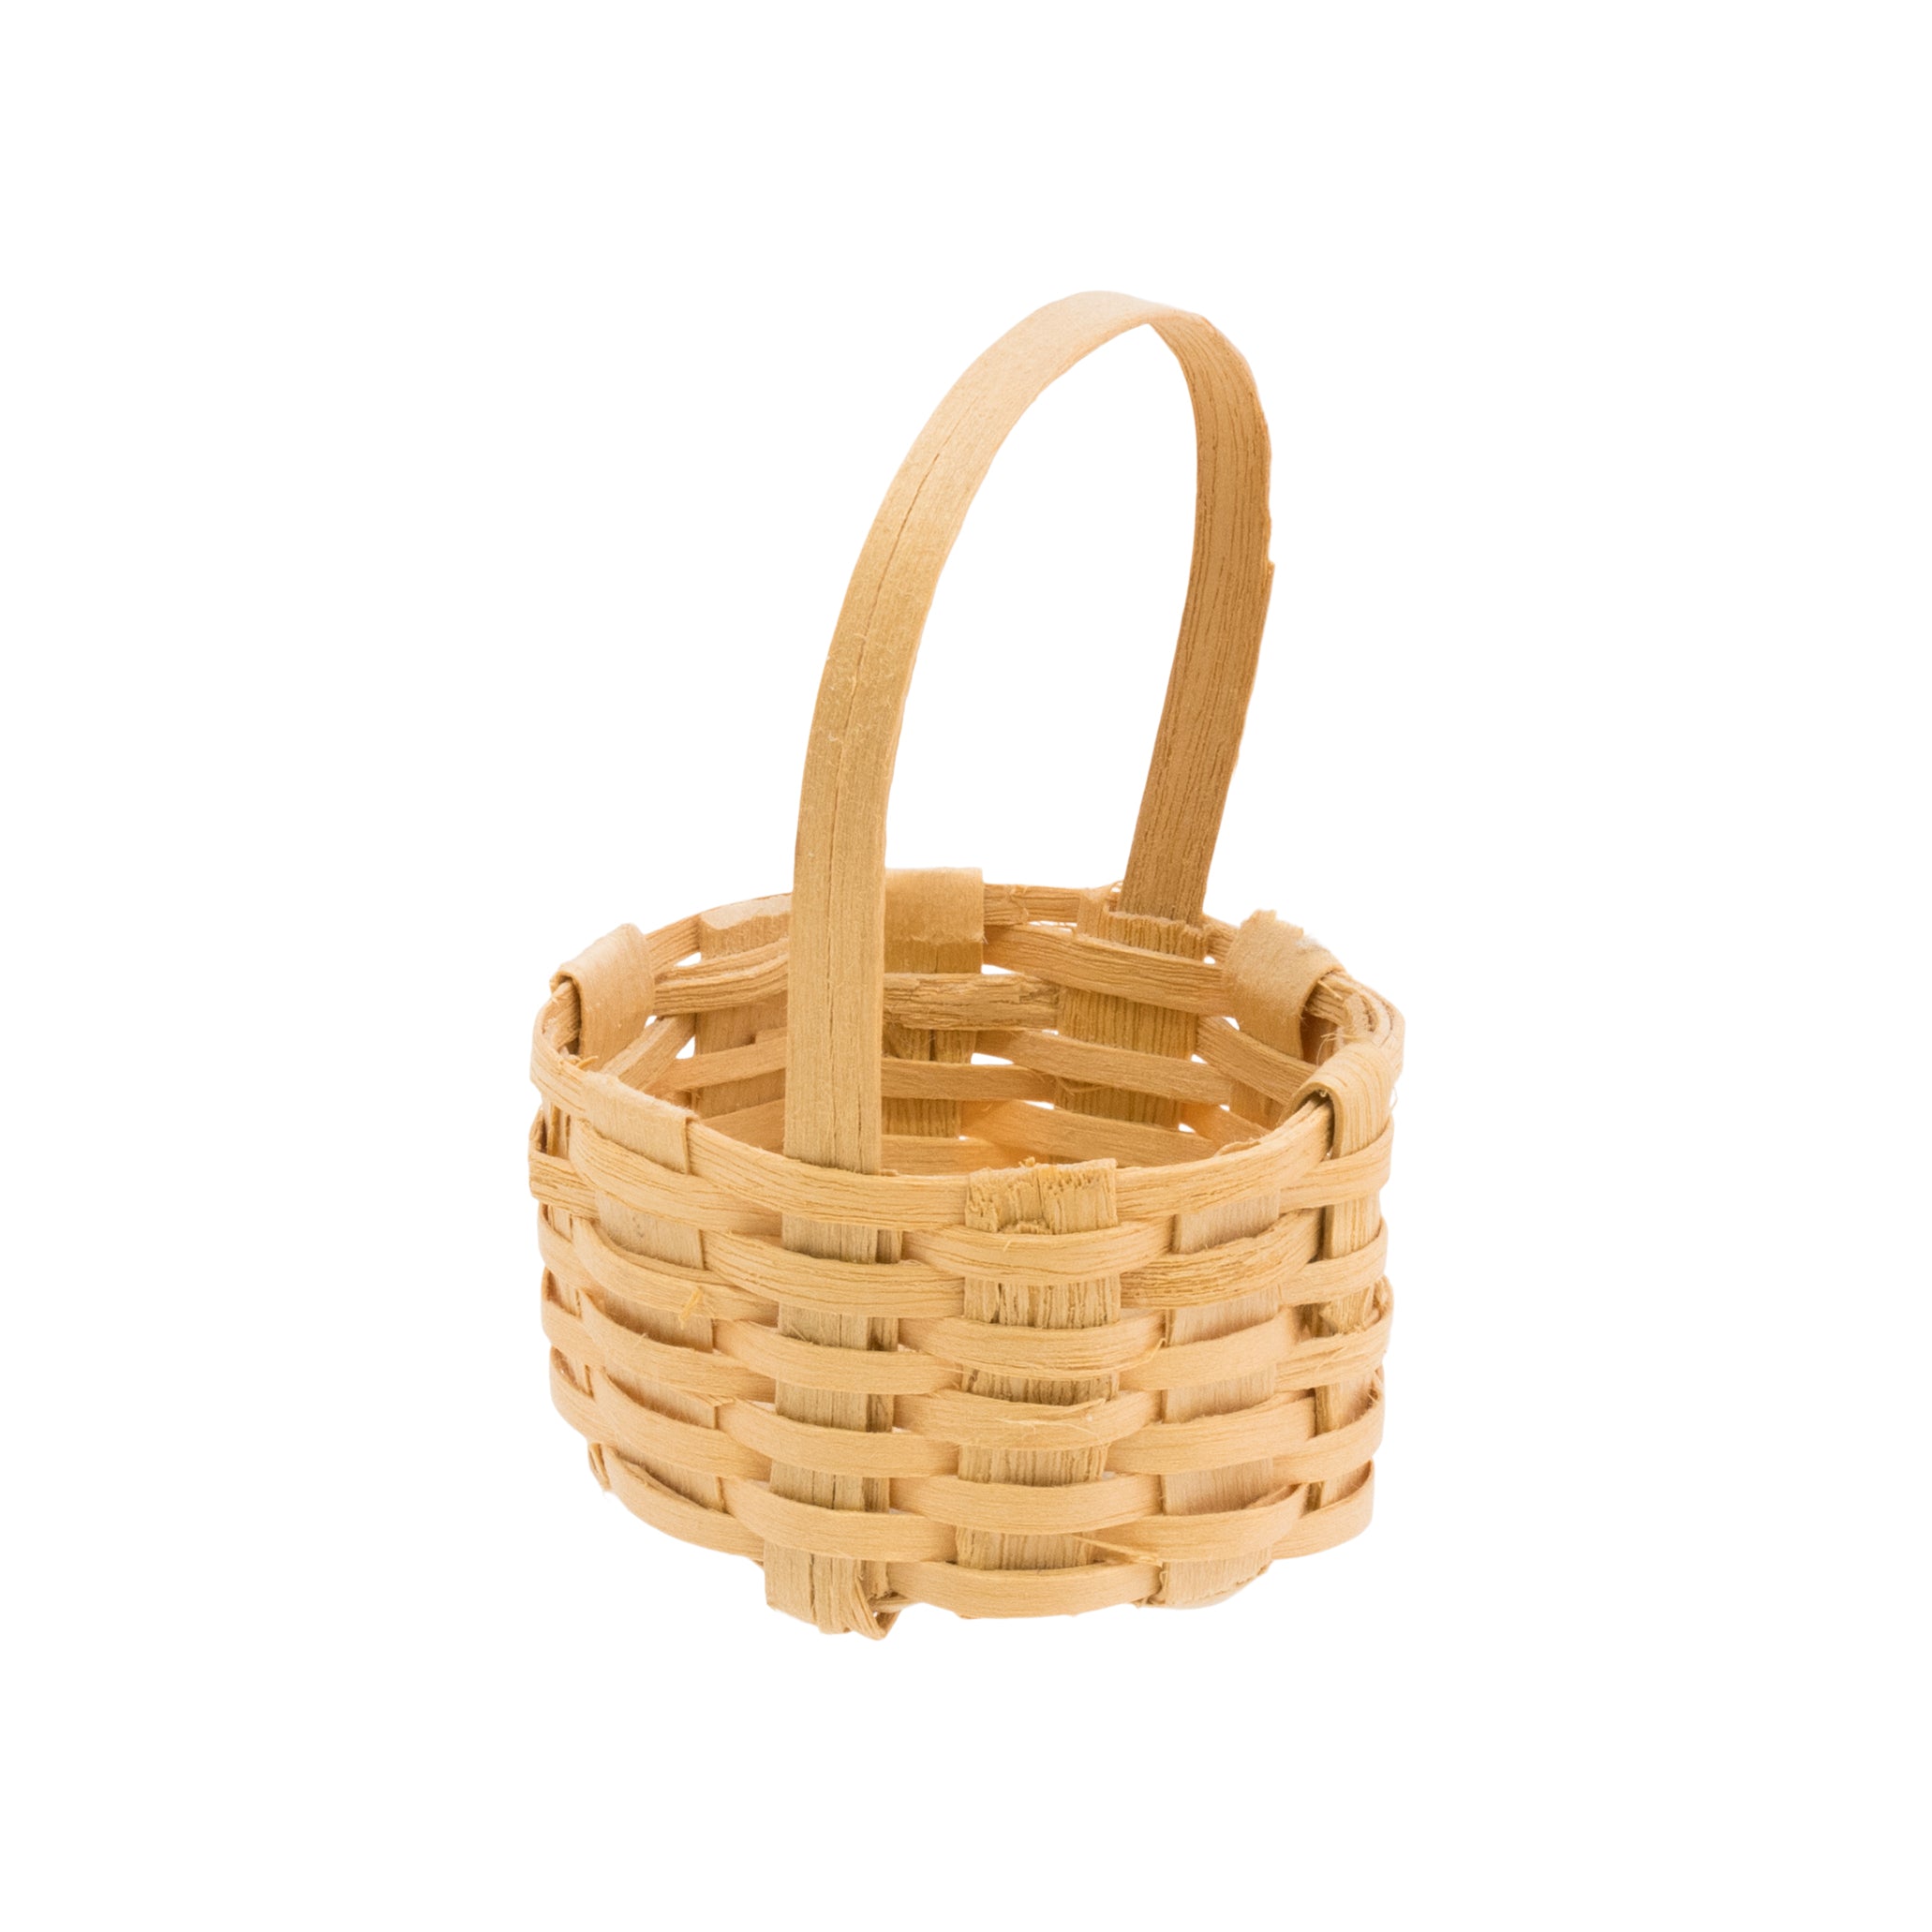 Potawatomi Miniature Baskets